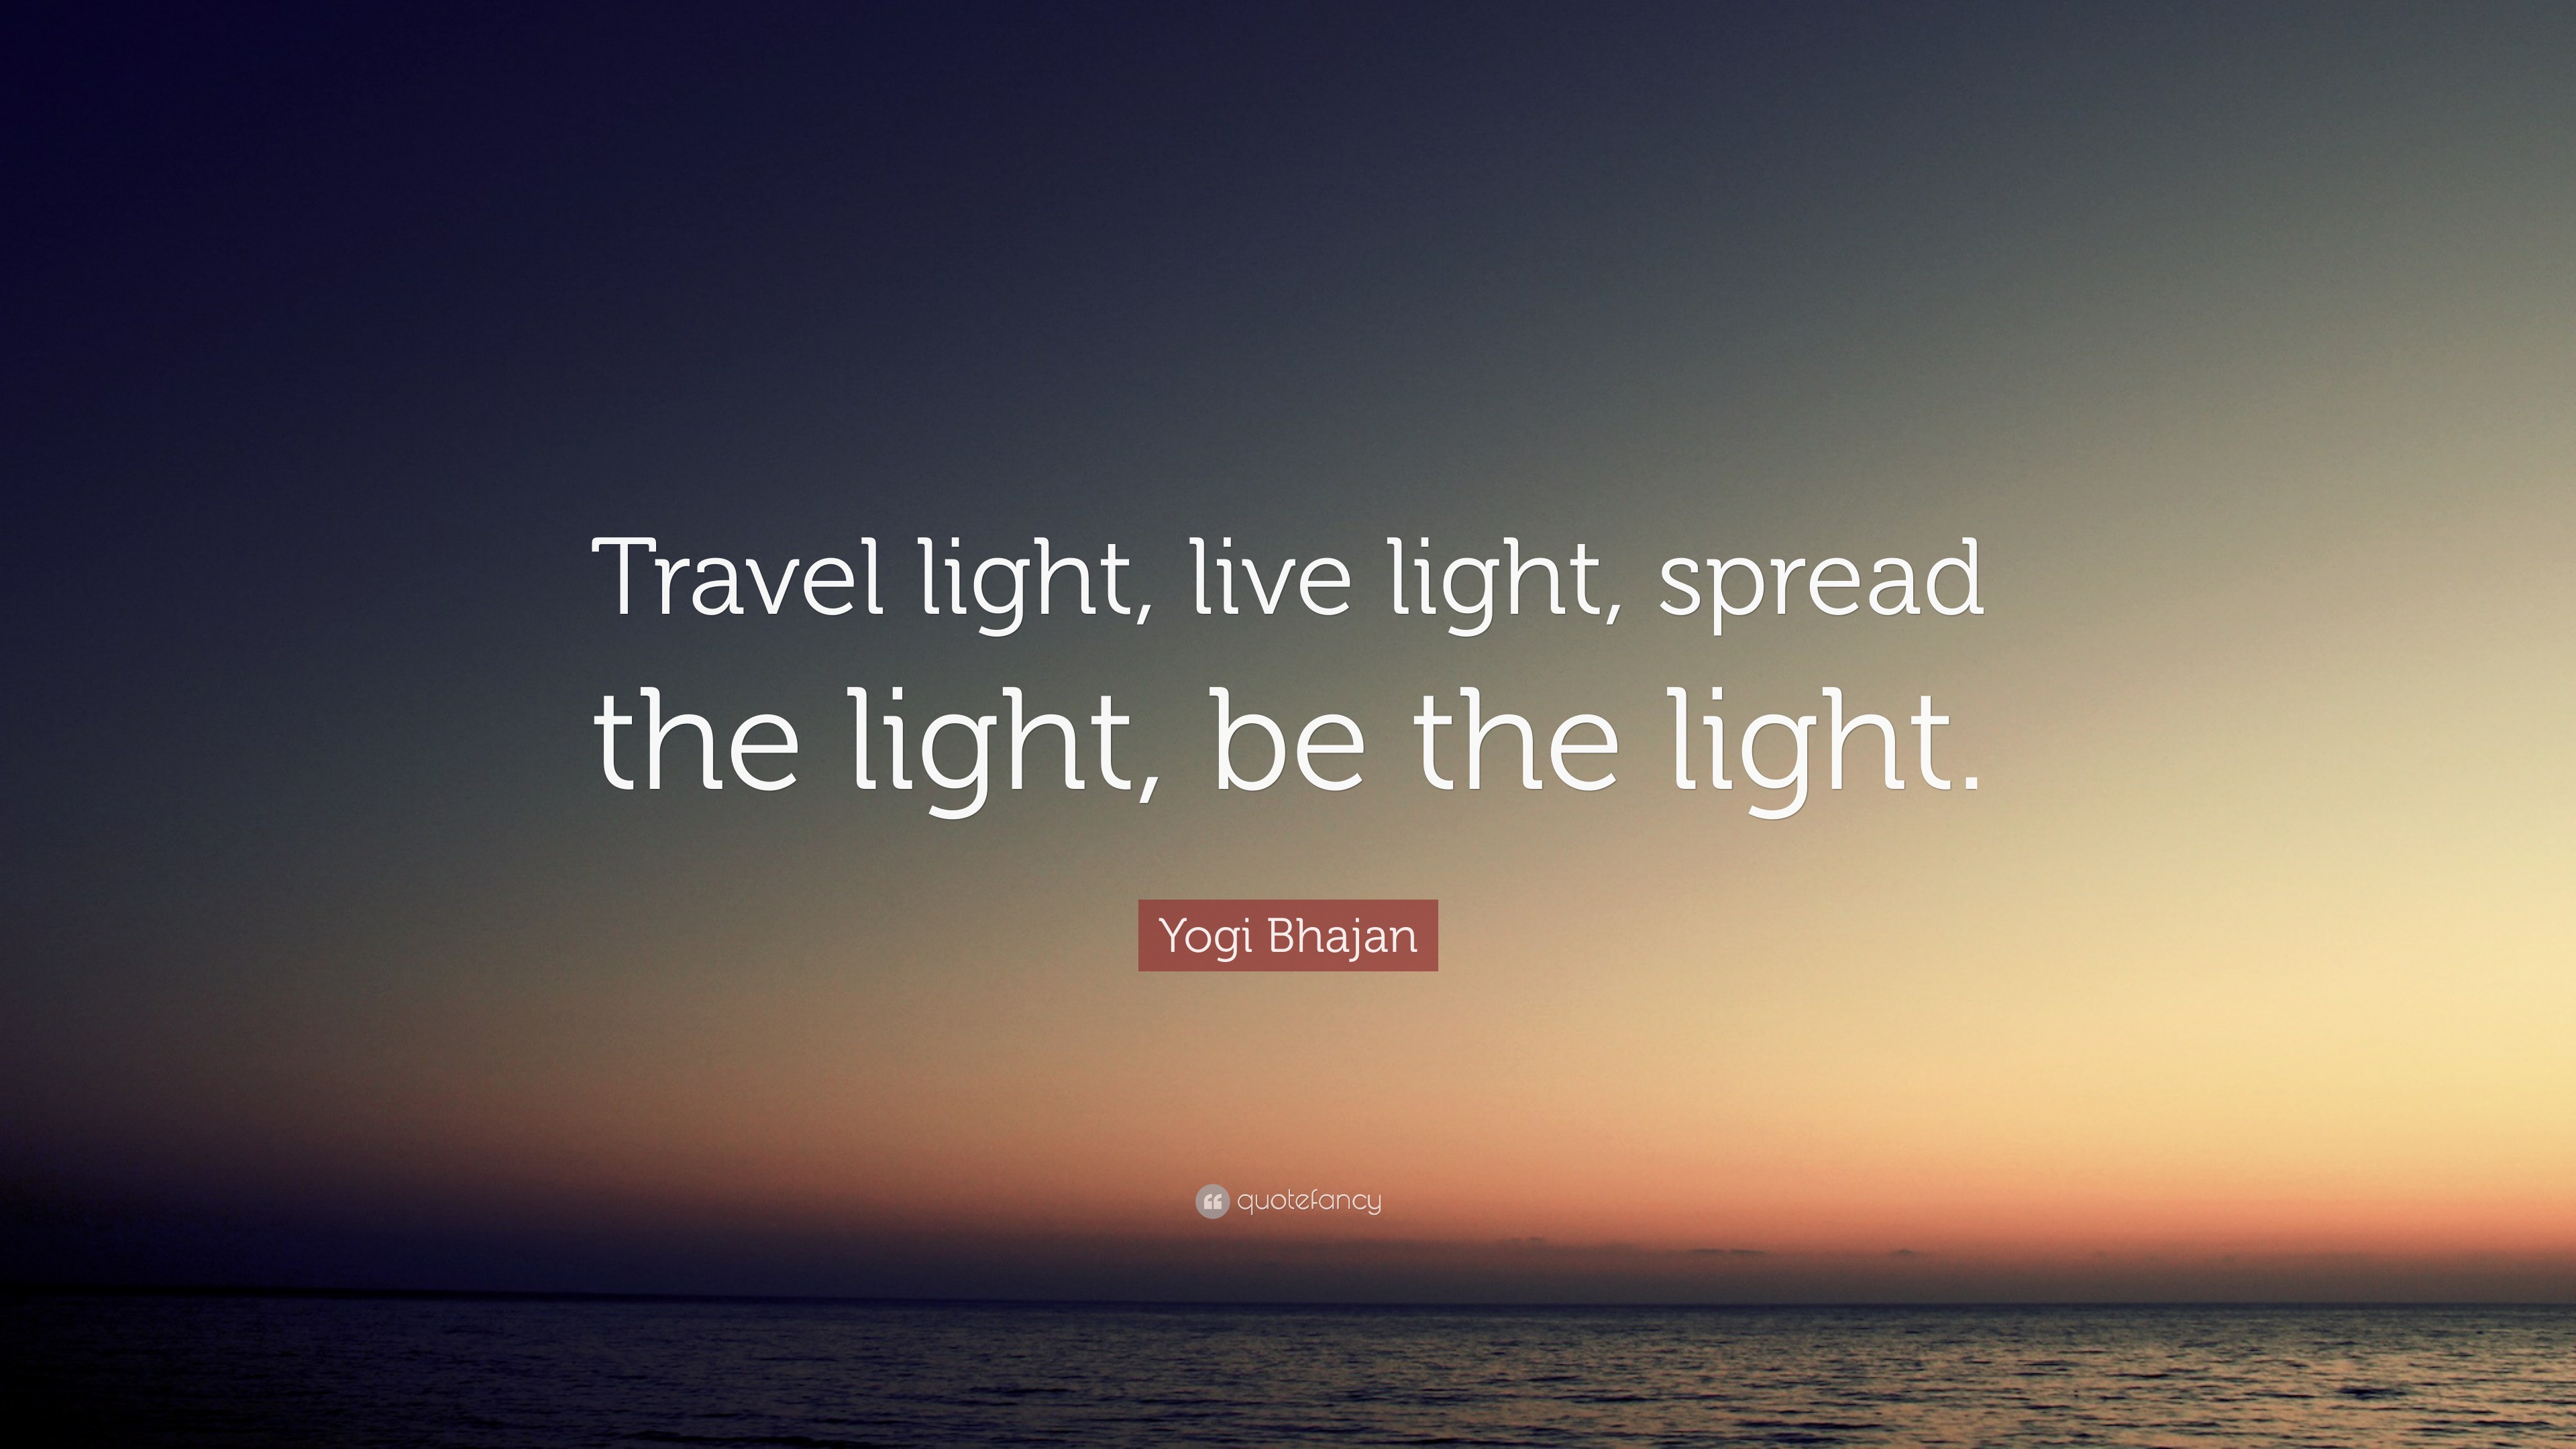 Yogi Bhajan Quote: “Travel light, live light, spread the light, be the light .”